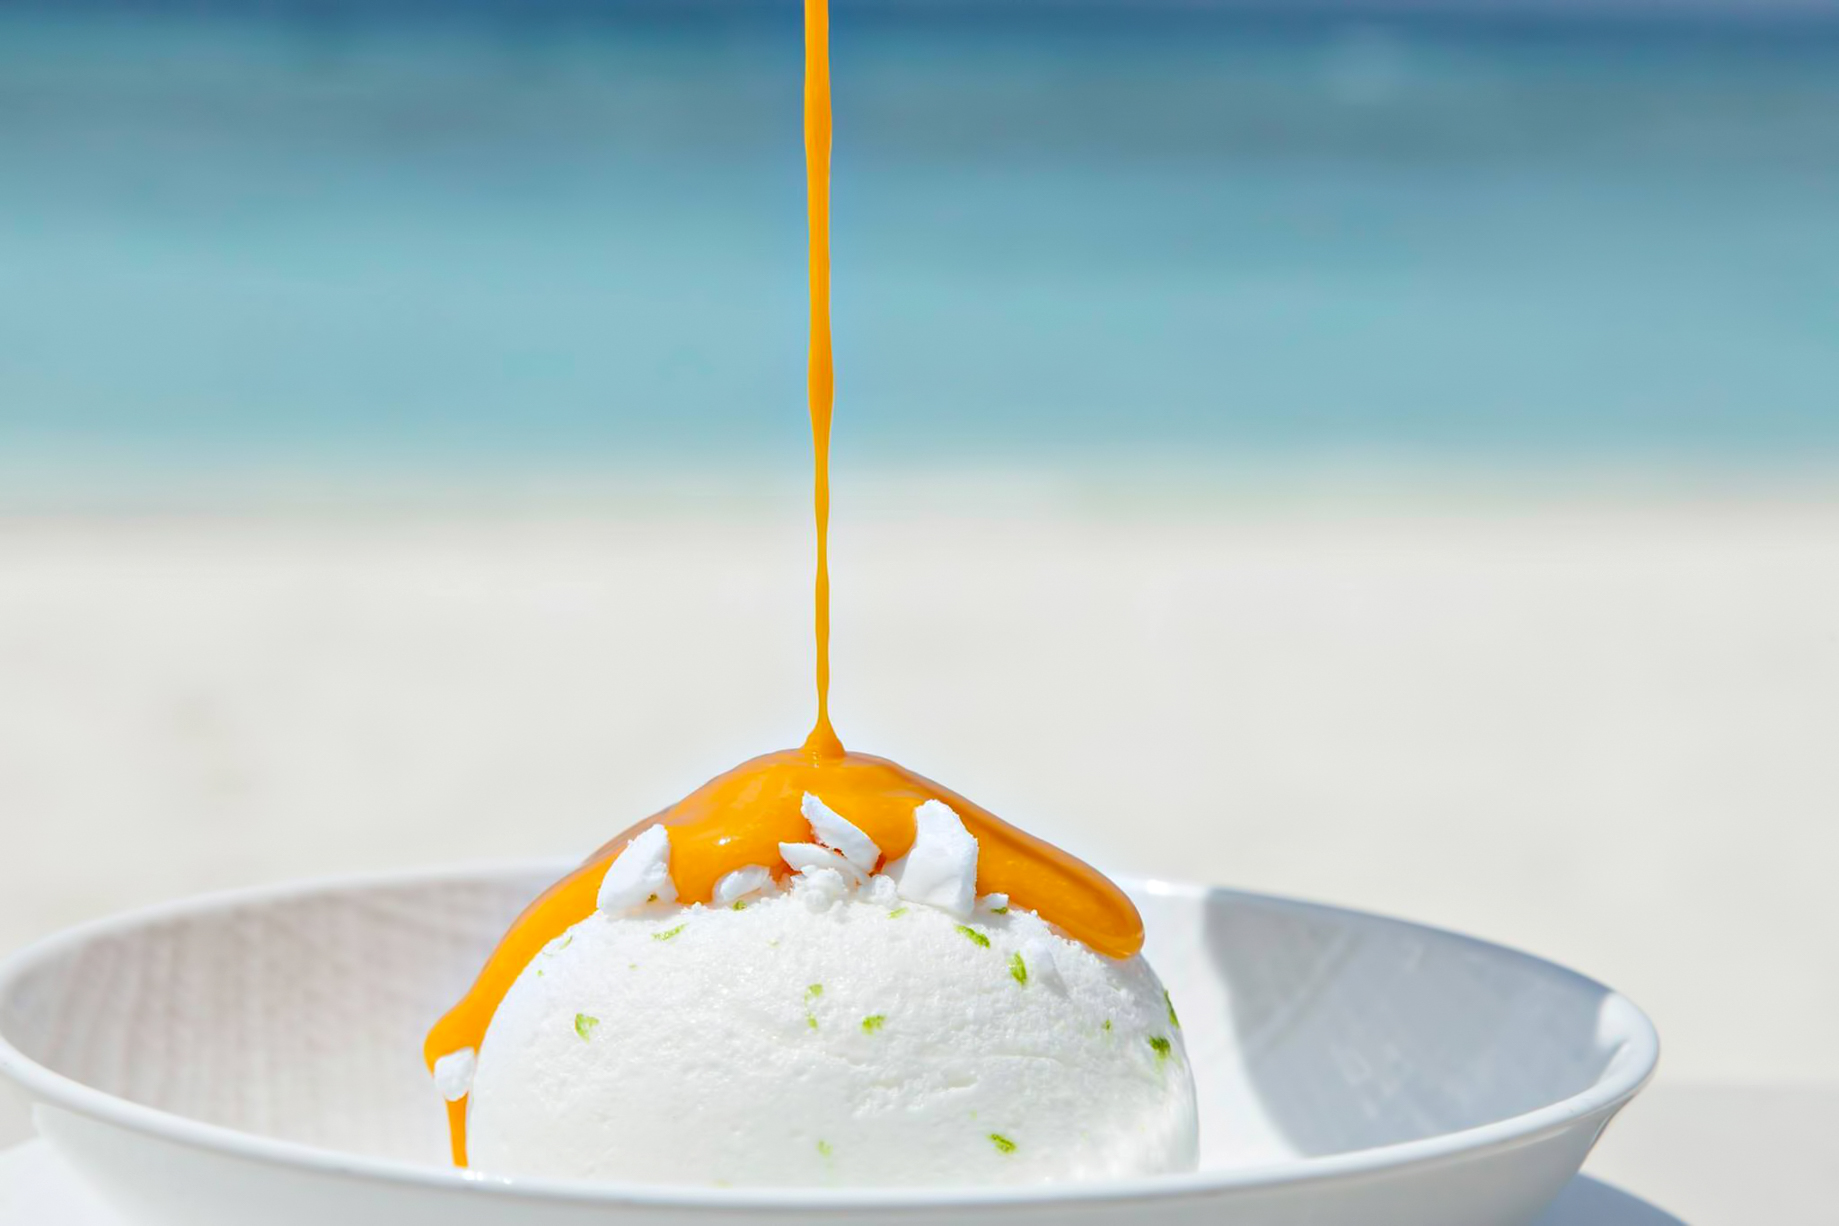 Cheval Blanc Randheli Resort – Noonu Atoll, Maldives – Dessert on the Beach